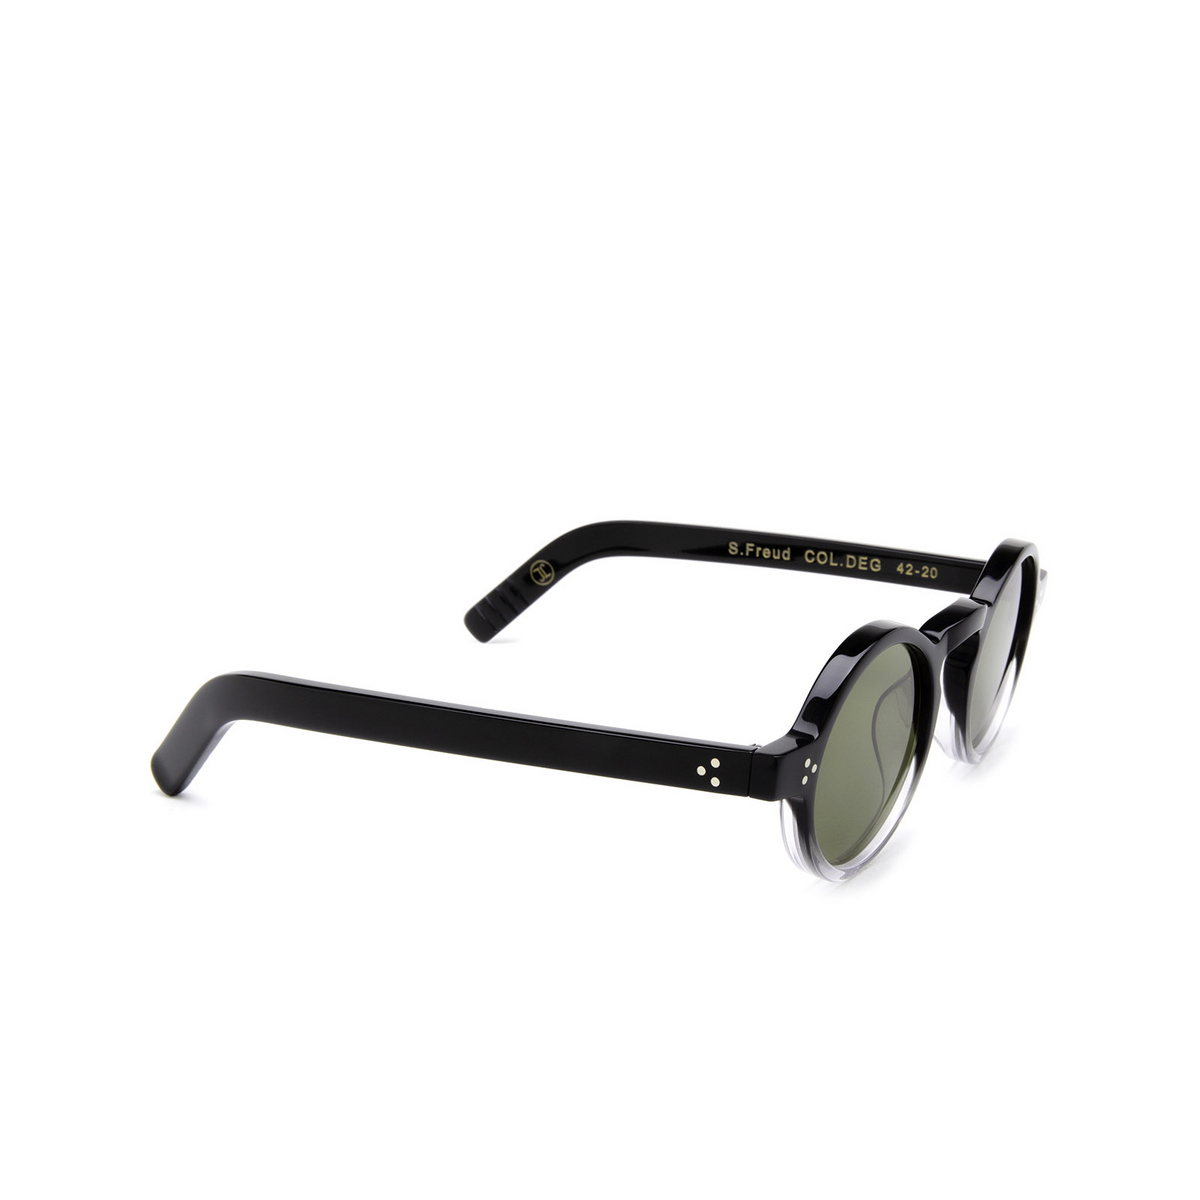 Lesca® Round Sunglasses: S.freud color Black Gradient Deg - three-quarters view.